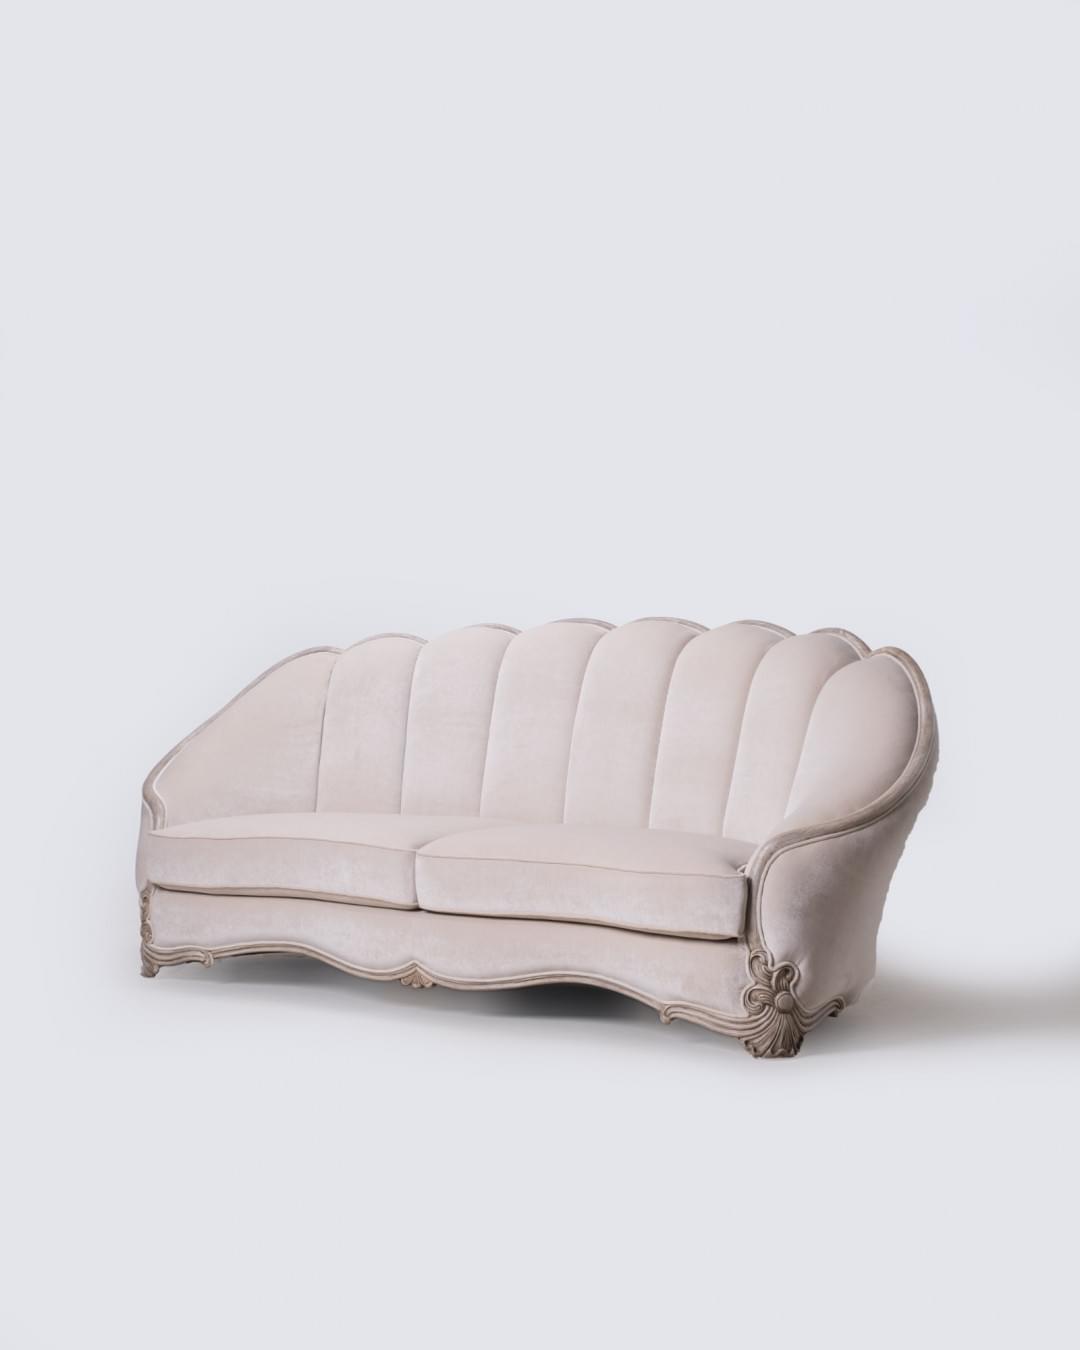 ROSELINE SOFA from Lifetime Design Furniture